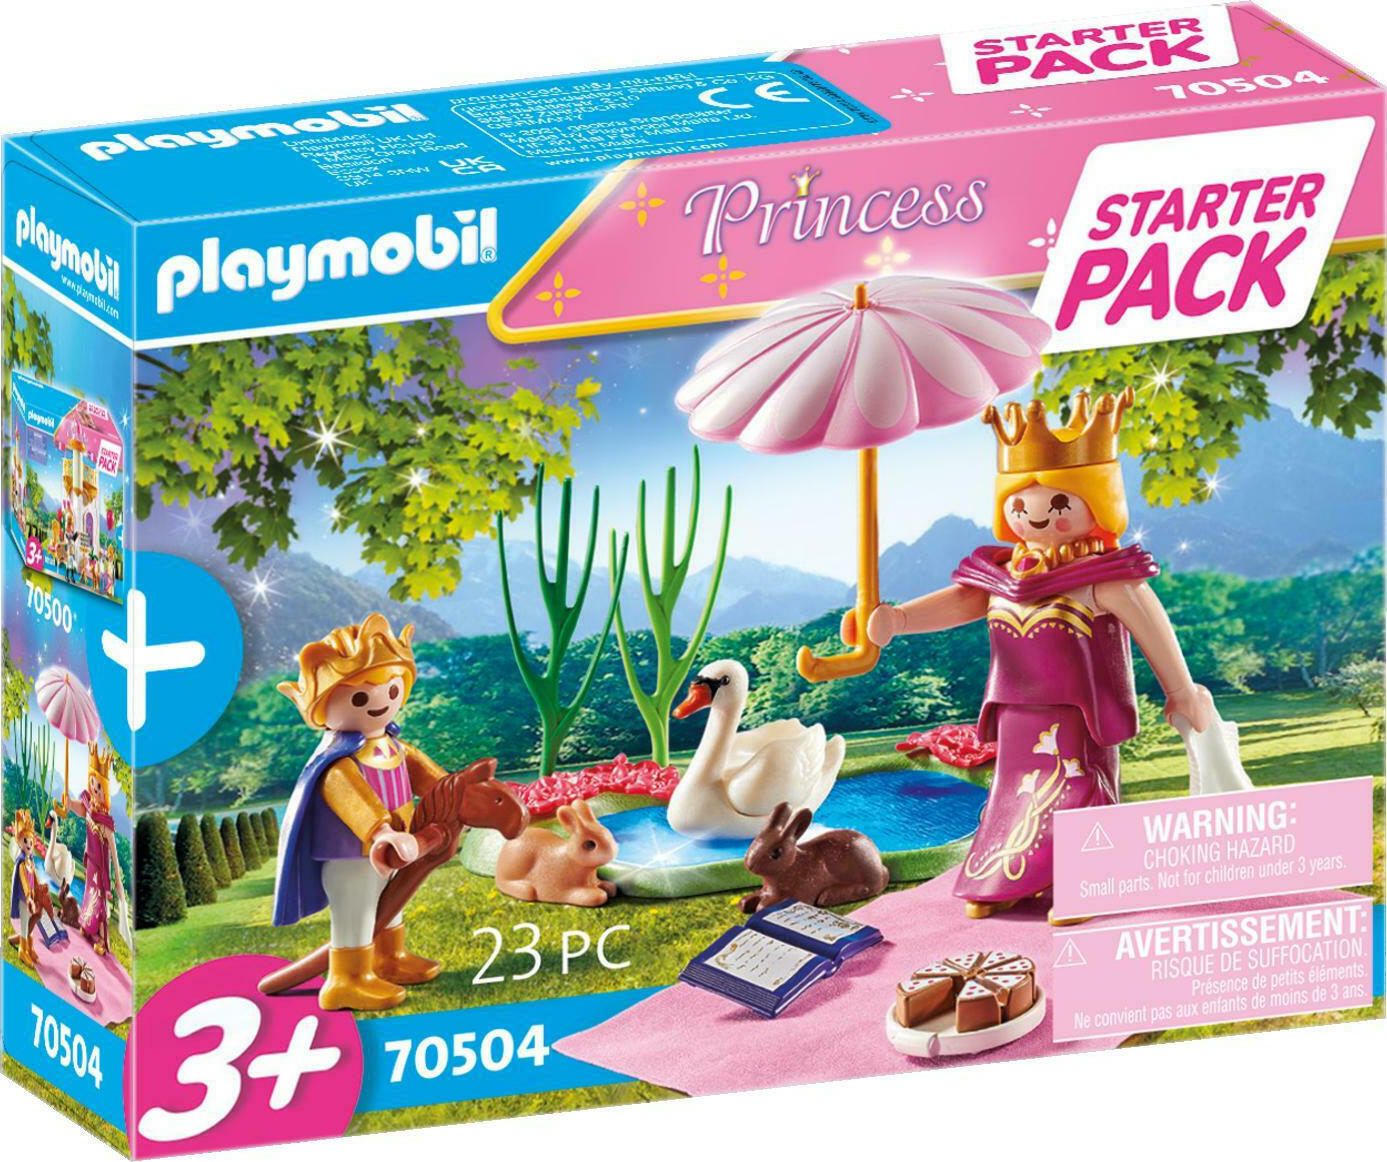 Playmobil Princess: Starter Pack Royal Picnic. 70504